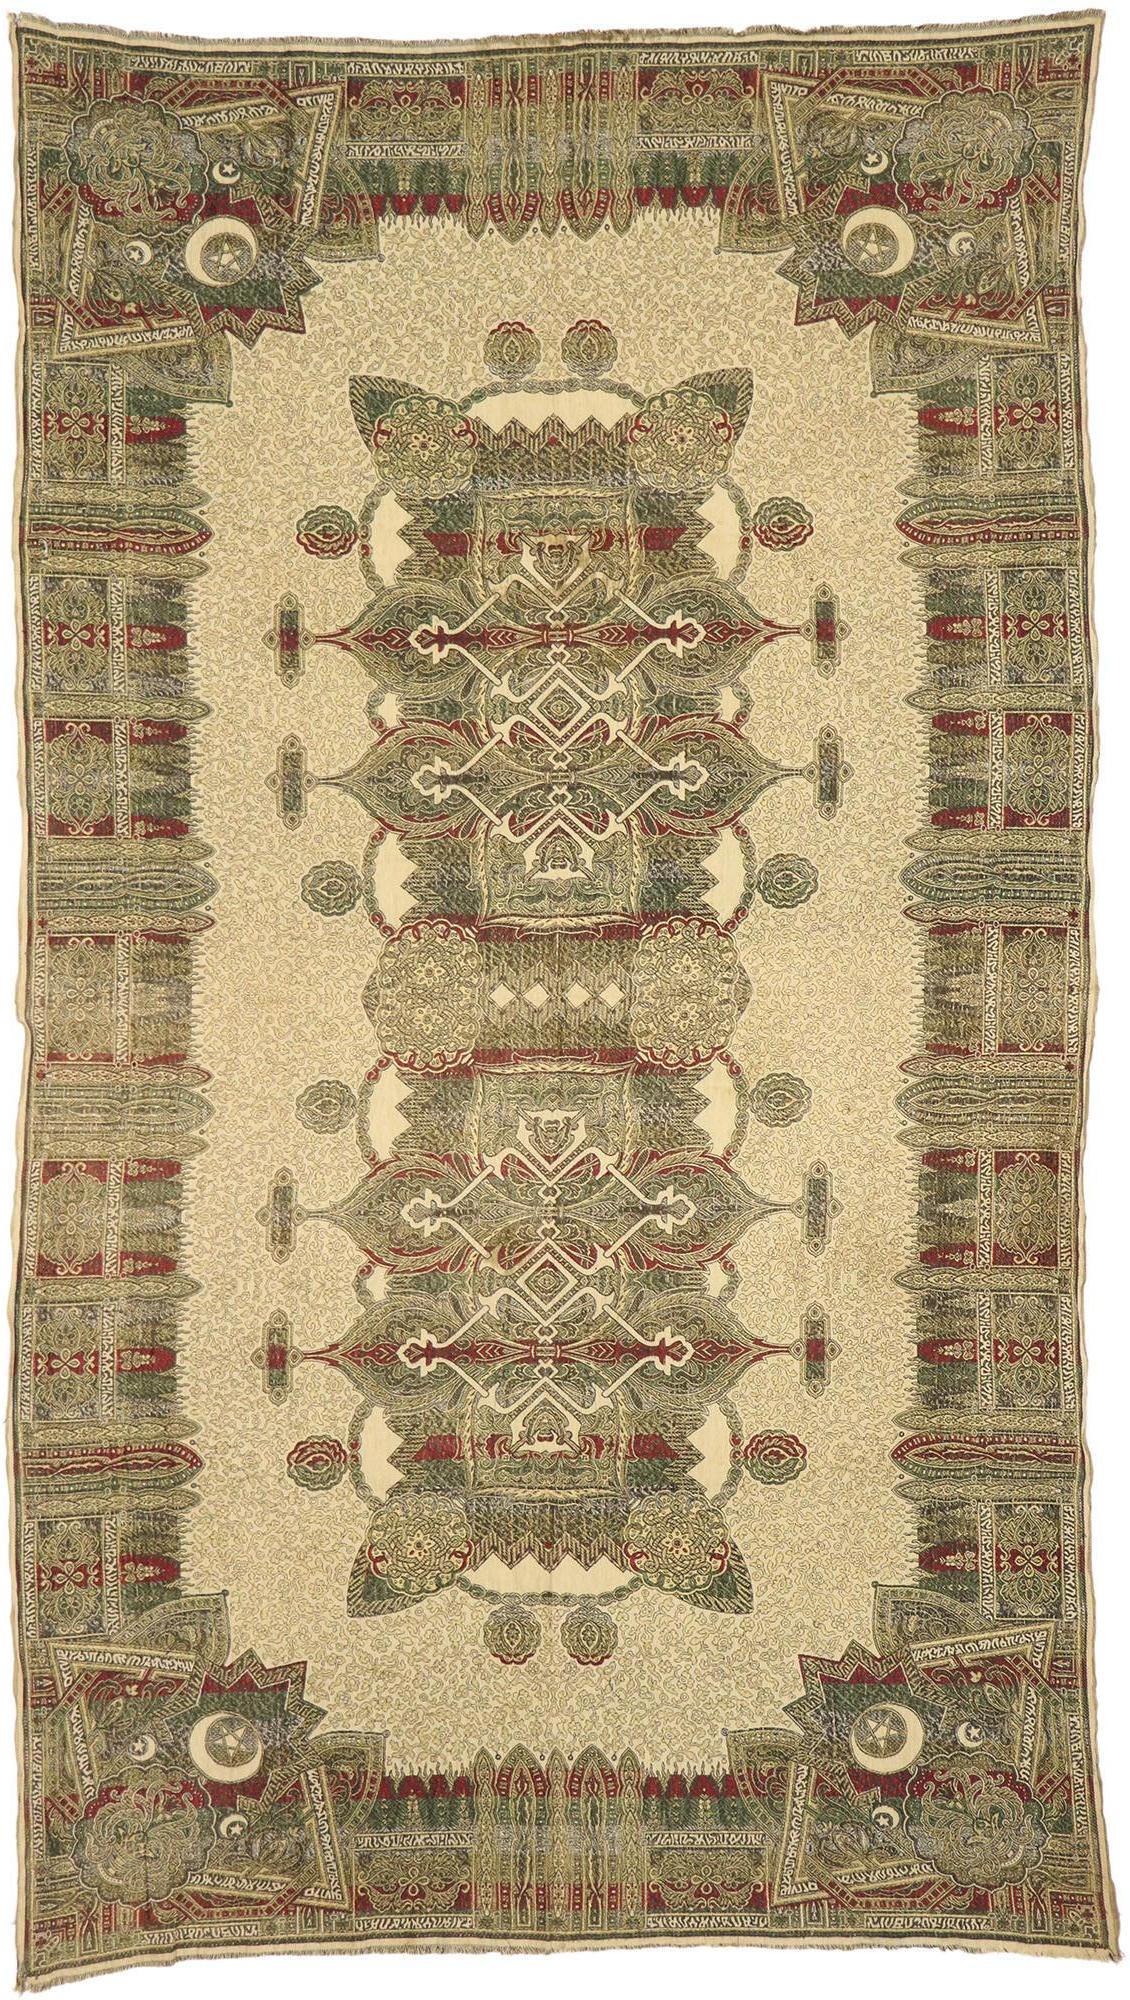 Spanish More Carpets